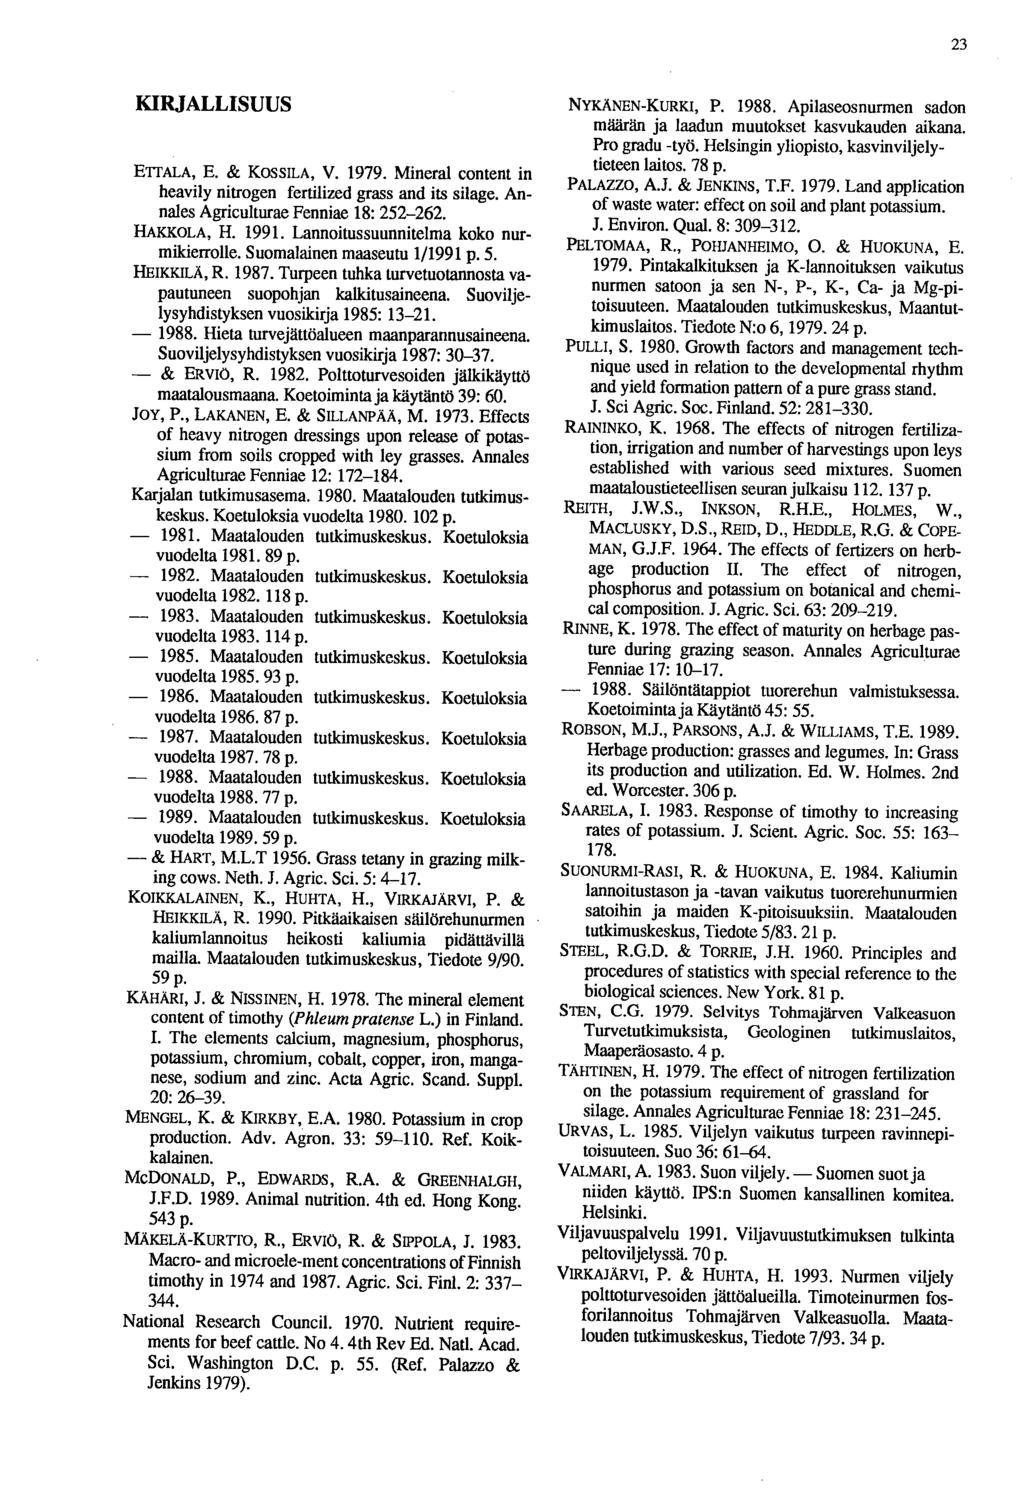 23 KIRJALLISUUS ETTALA, E. & KOSSILA, V. 1979. Mineral content in heavily nitrogen fertilized grass and its silage. Annales Agriculturae Fenniae 18: 252-262. HAKKOLA, H. 1991.